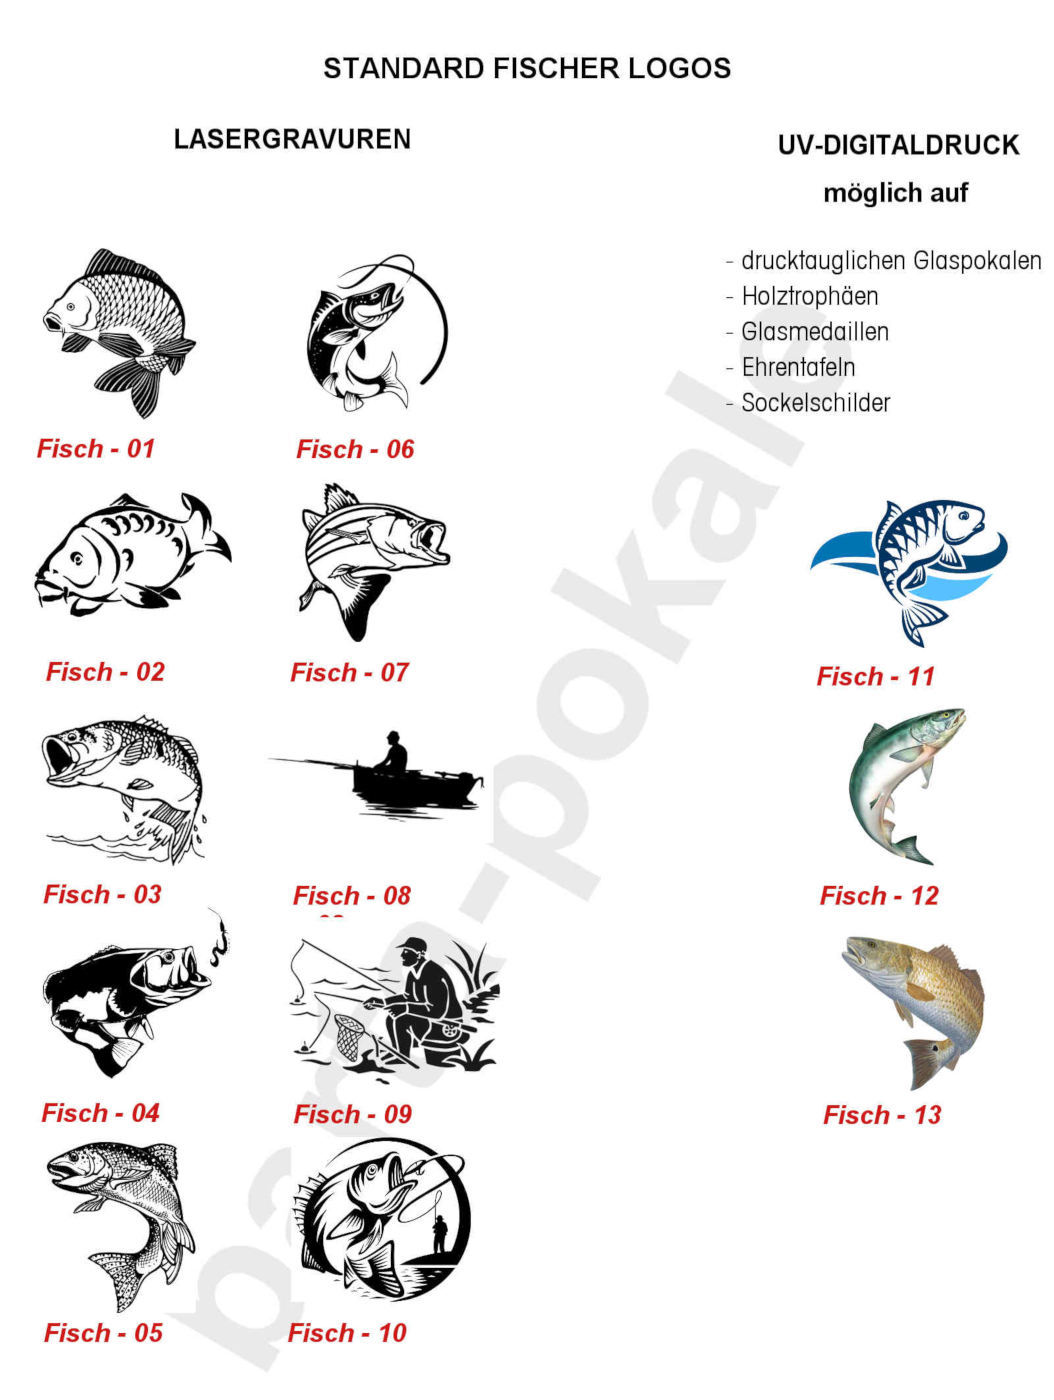 Standard Logos Fischen